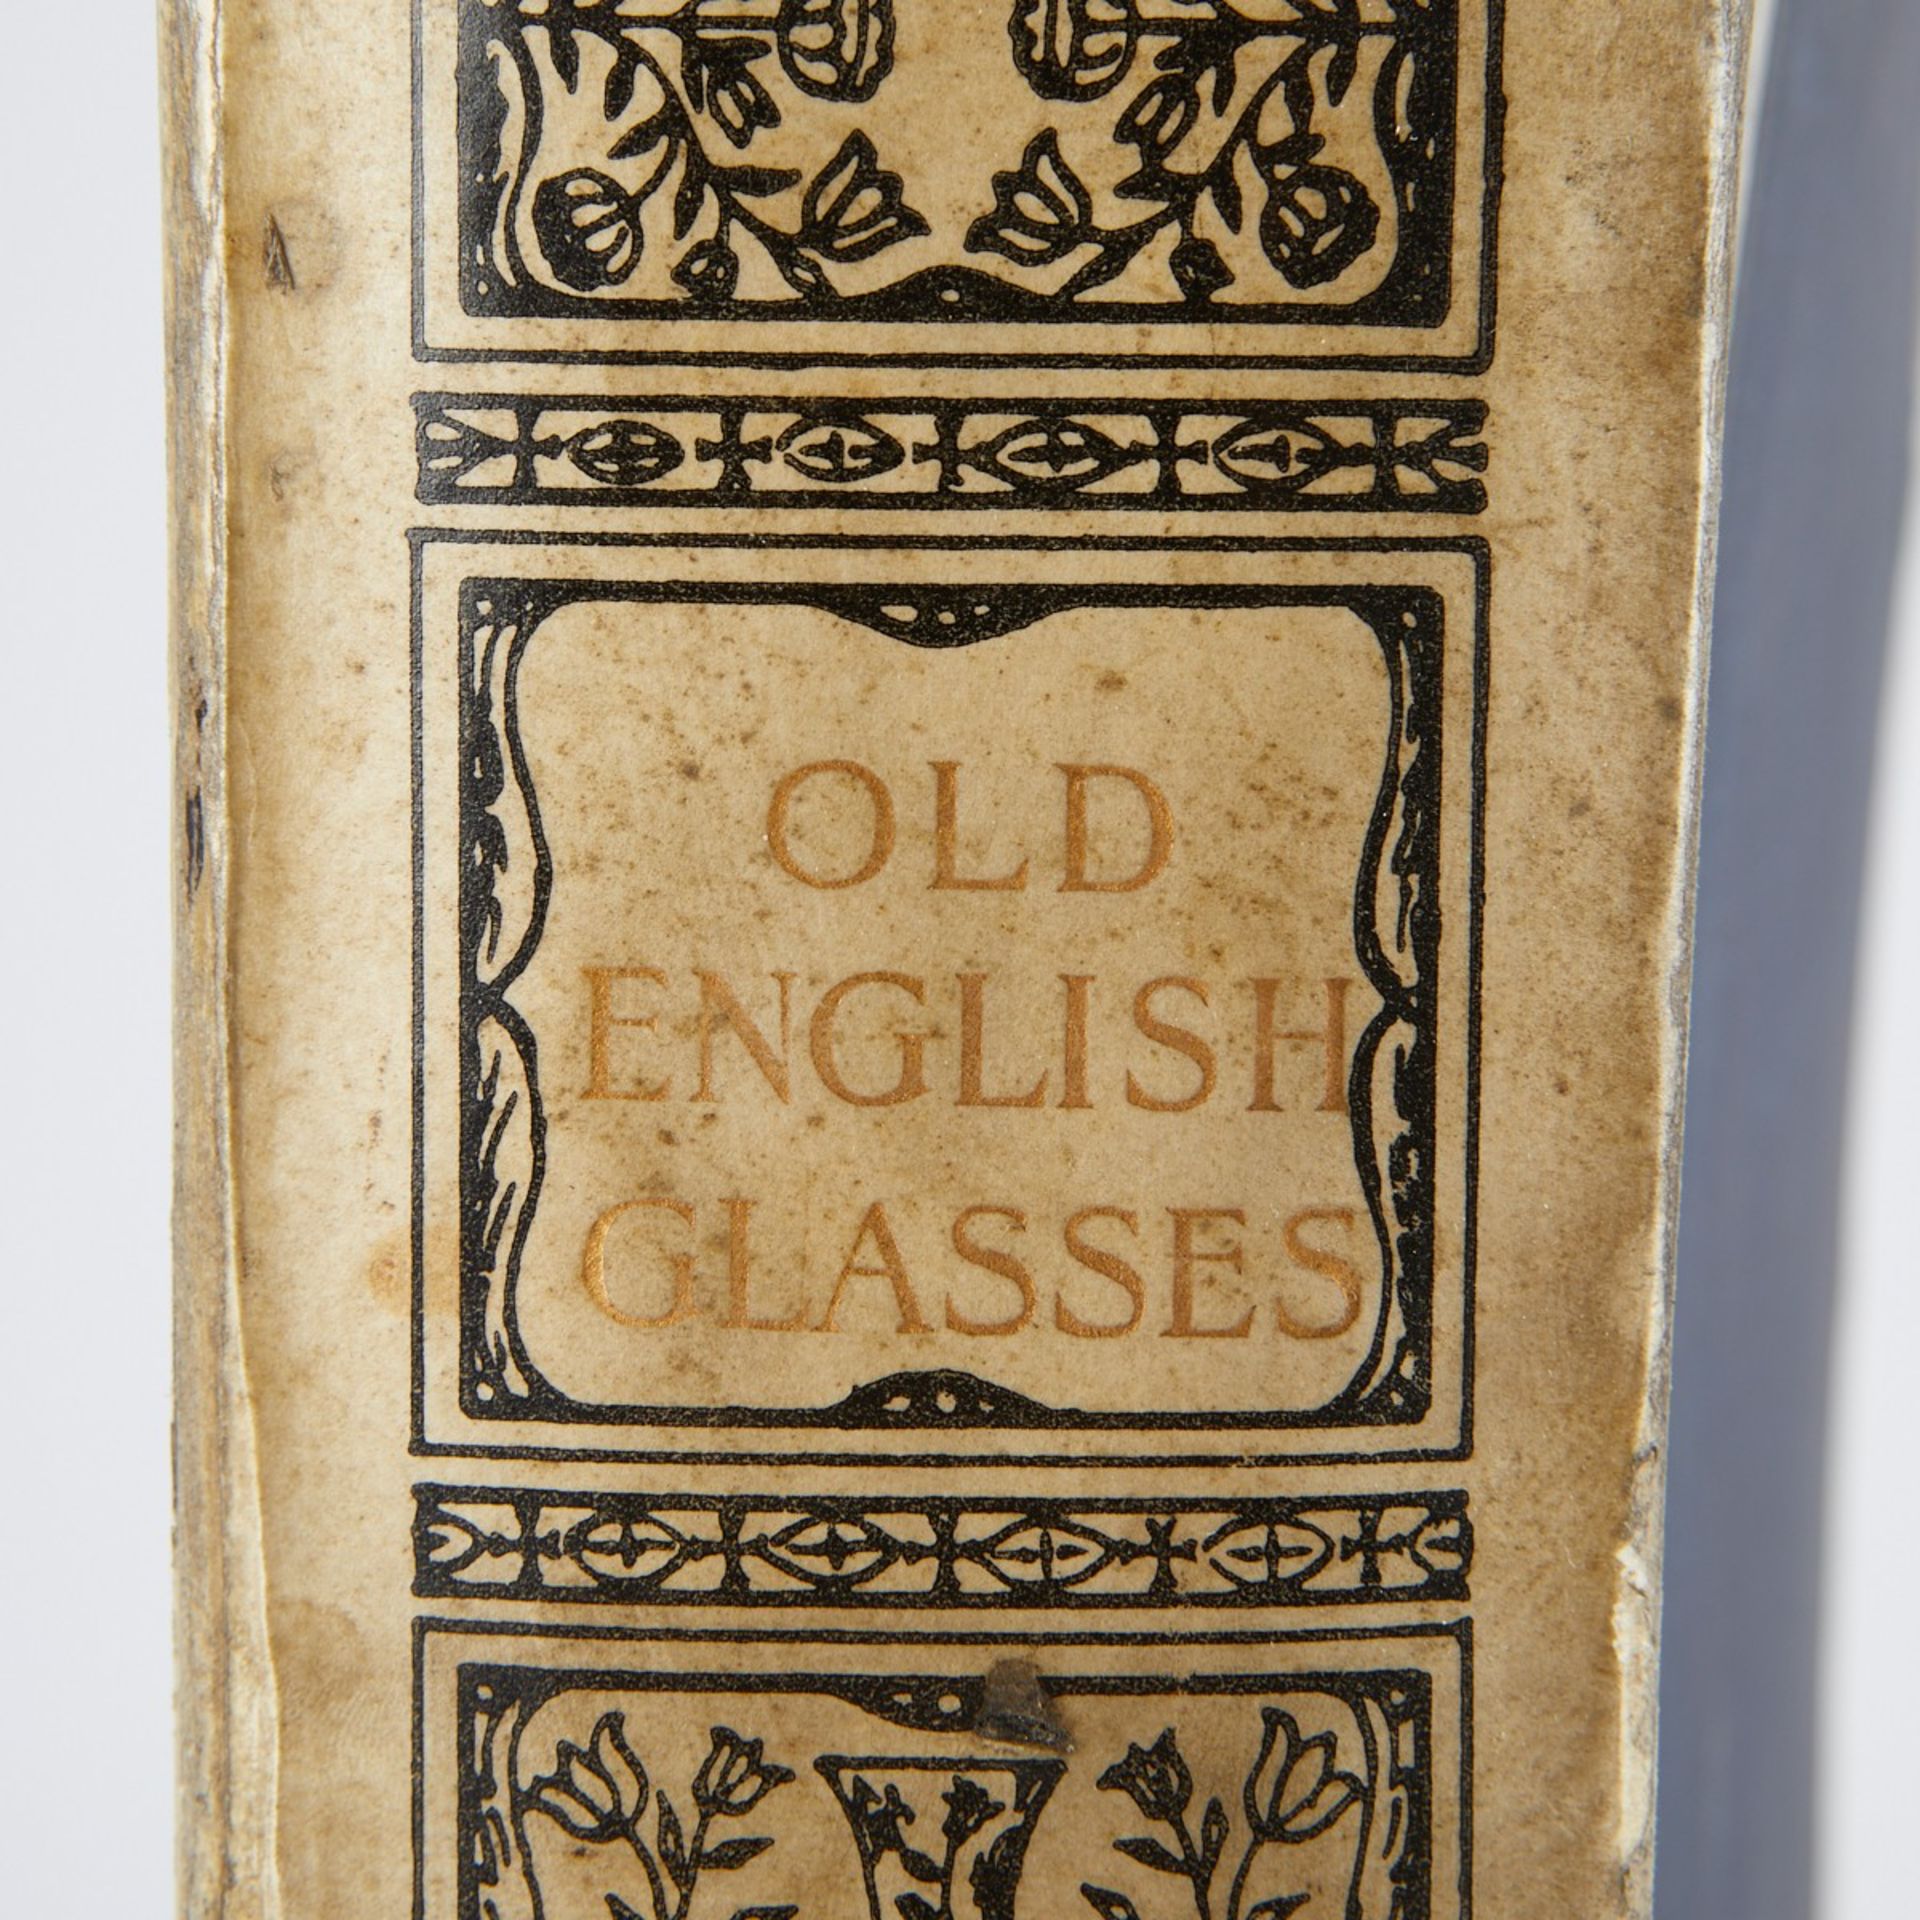 Old English Glasses Book Albert Hartshorne - Image 11 of 17